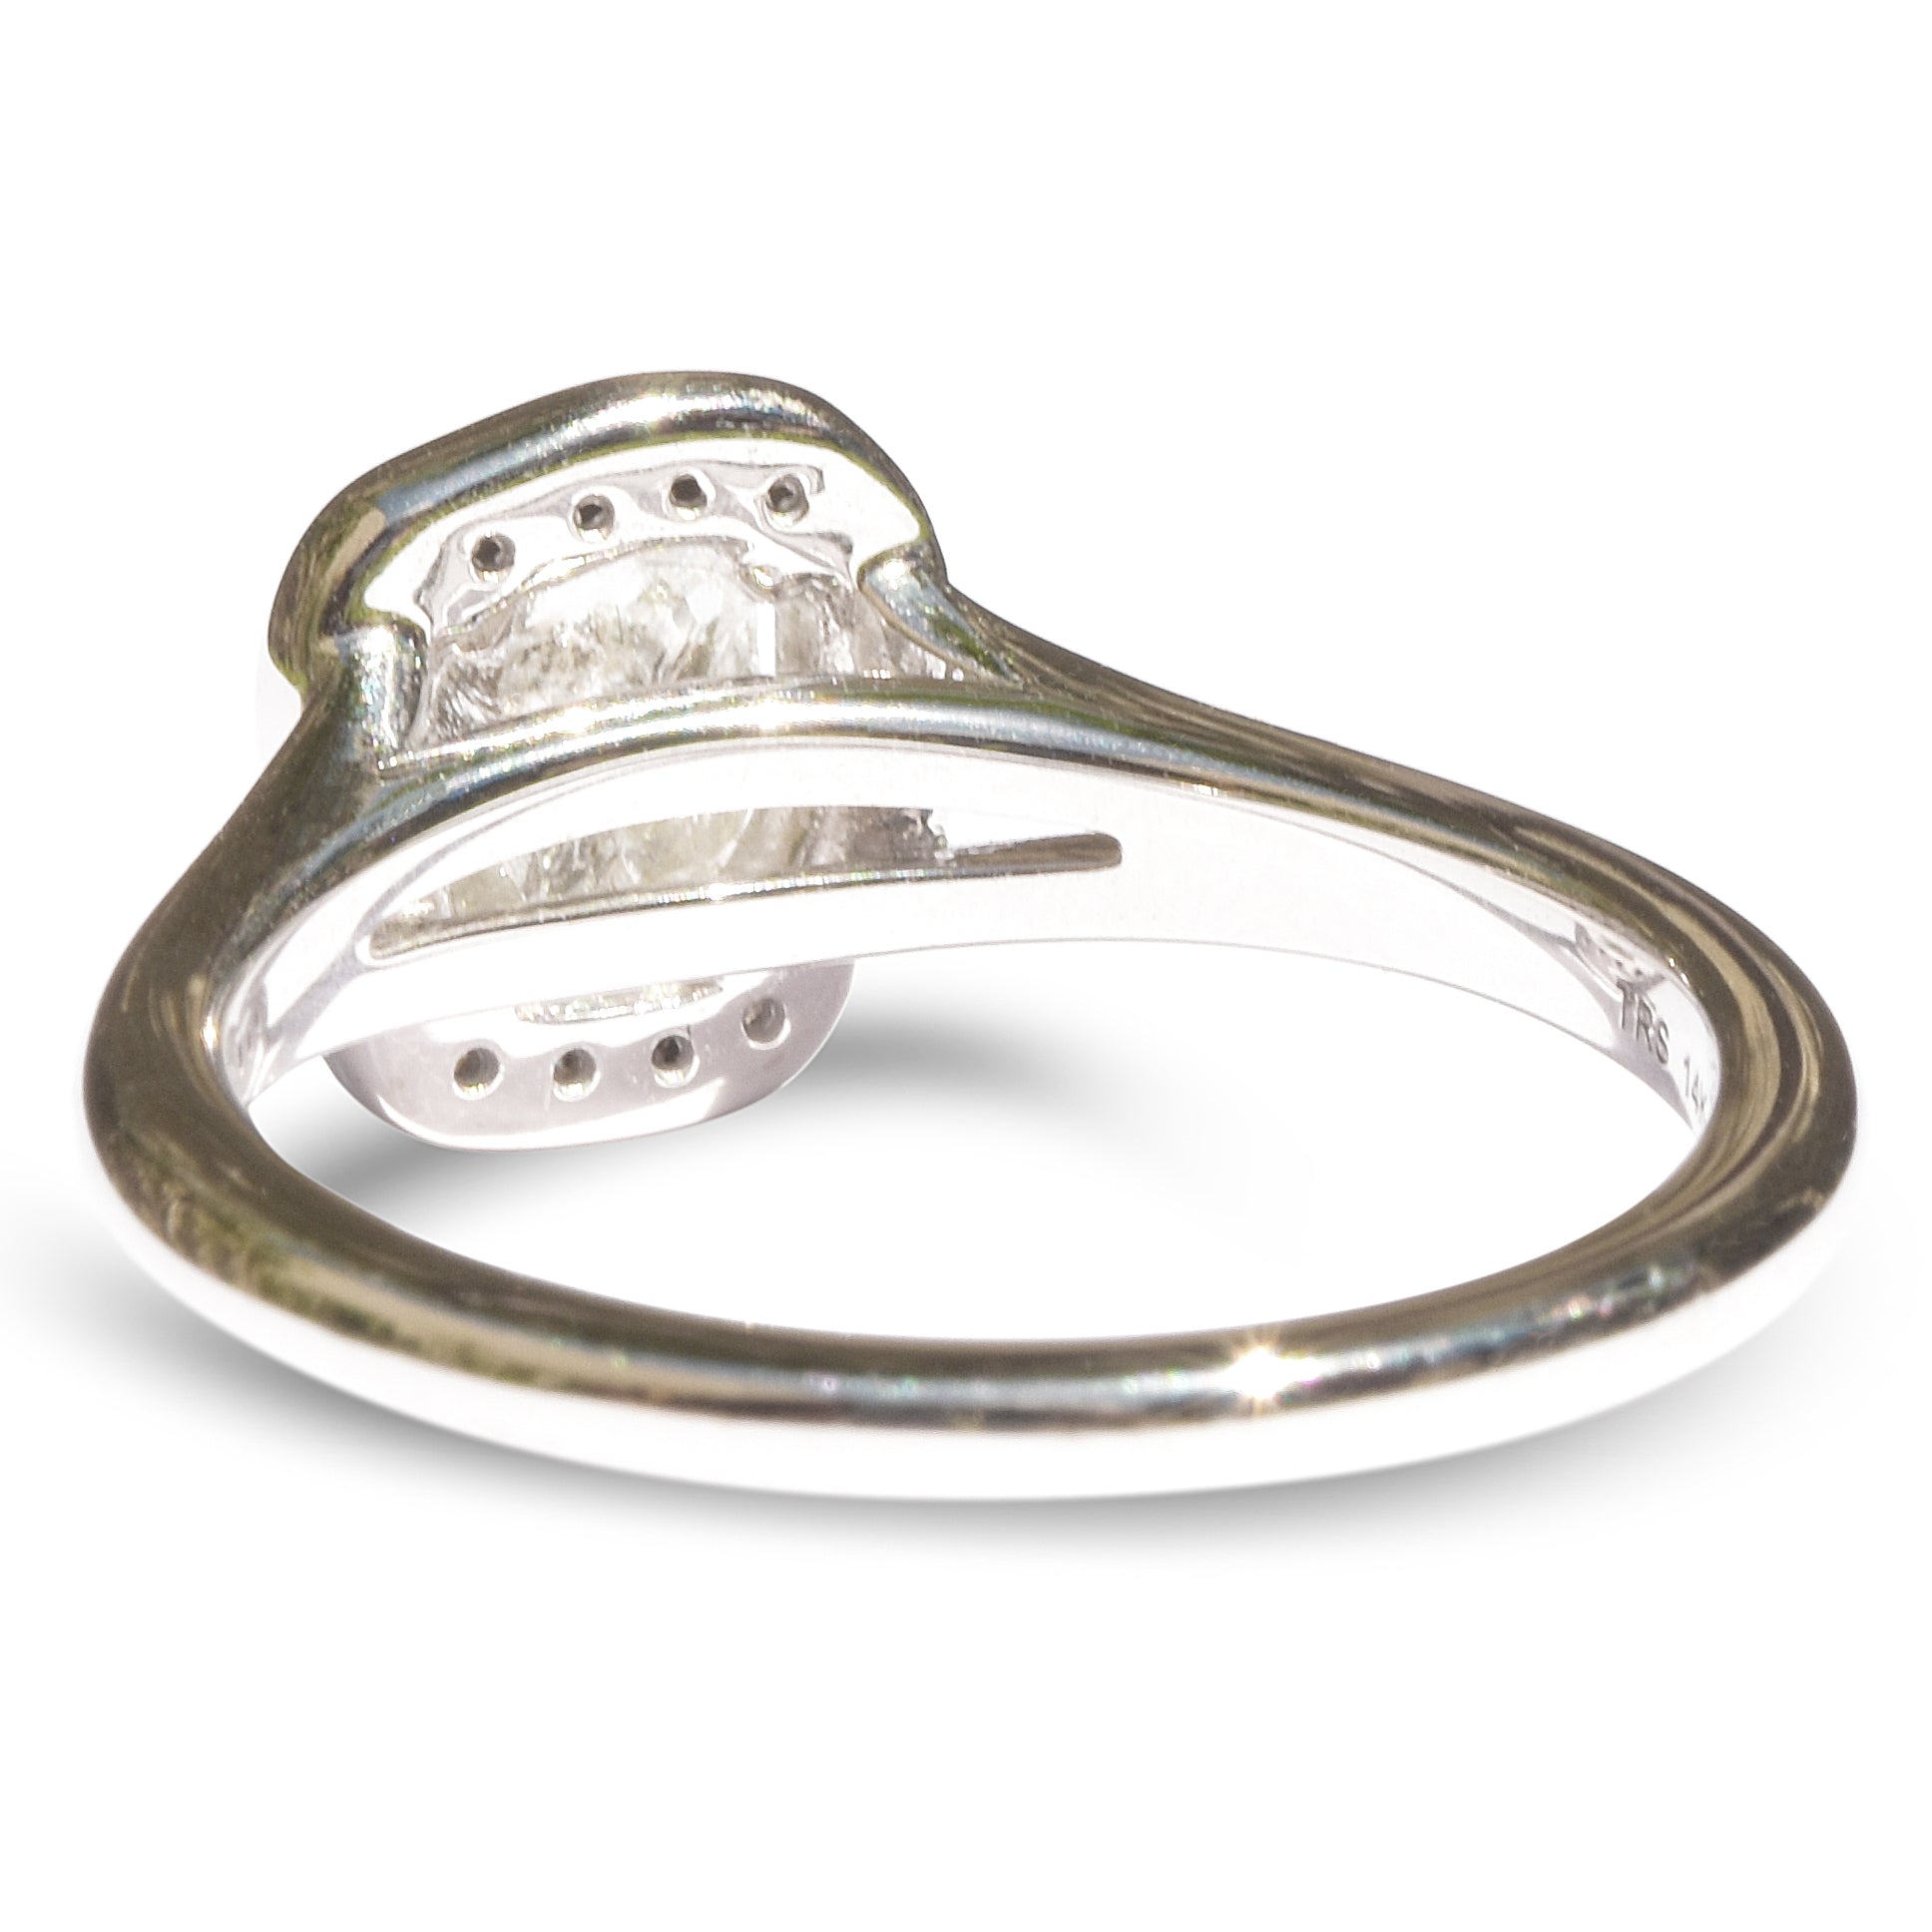 The hila ring - a unique rough diamond halo engagement ring